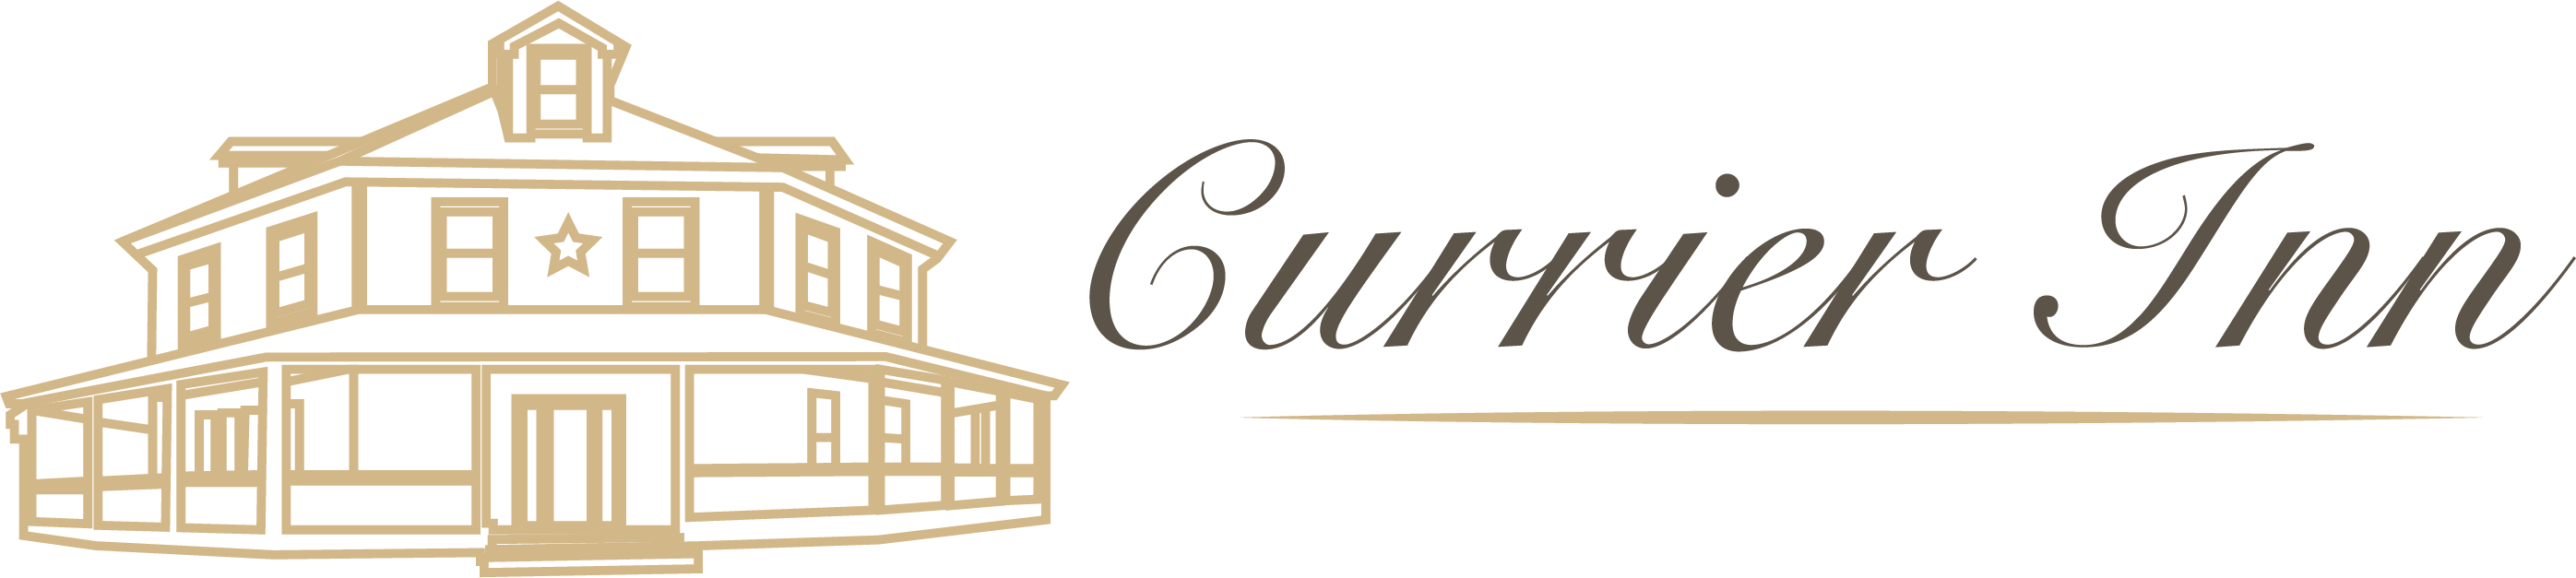 Currier Inn logo